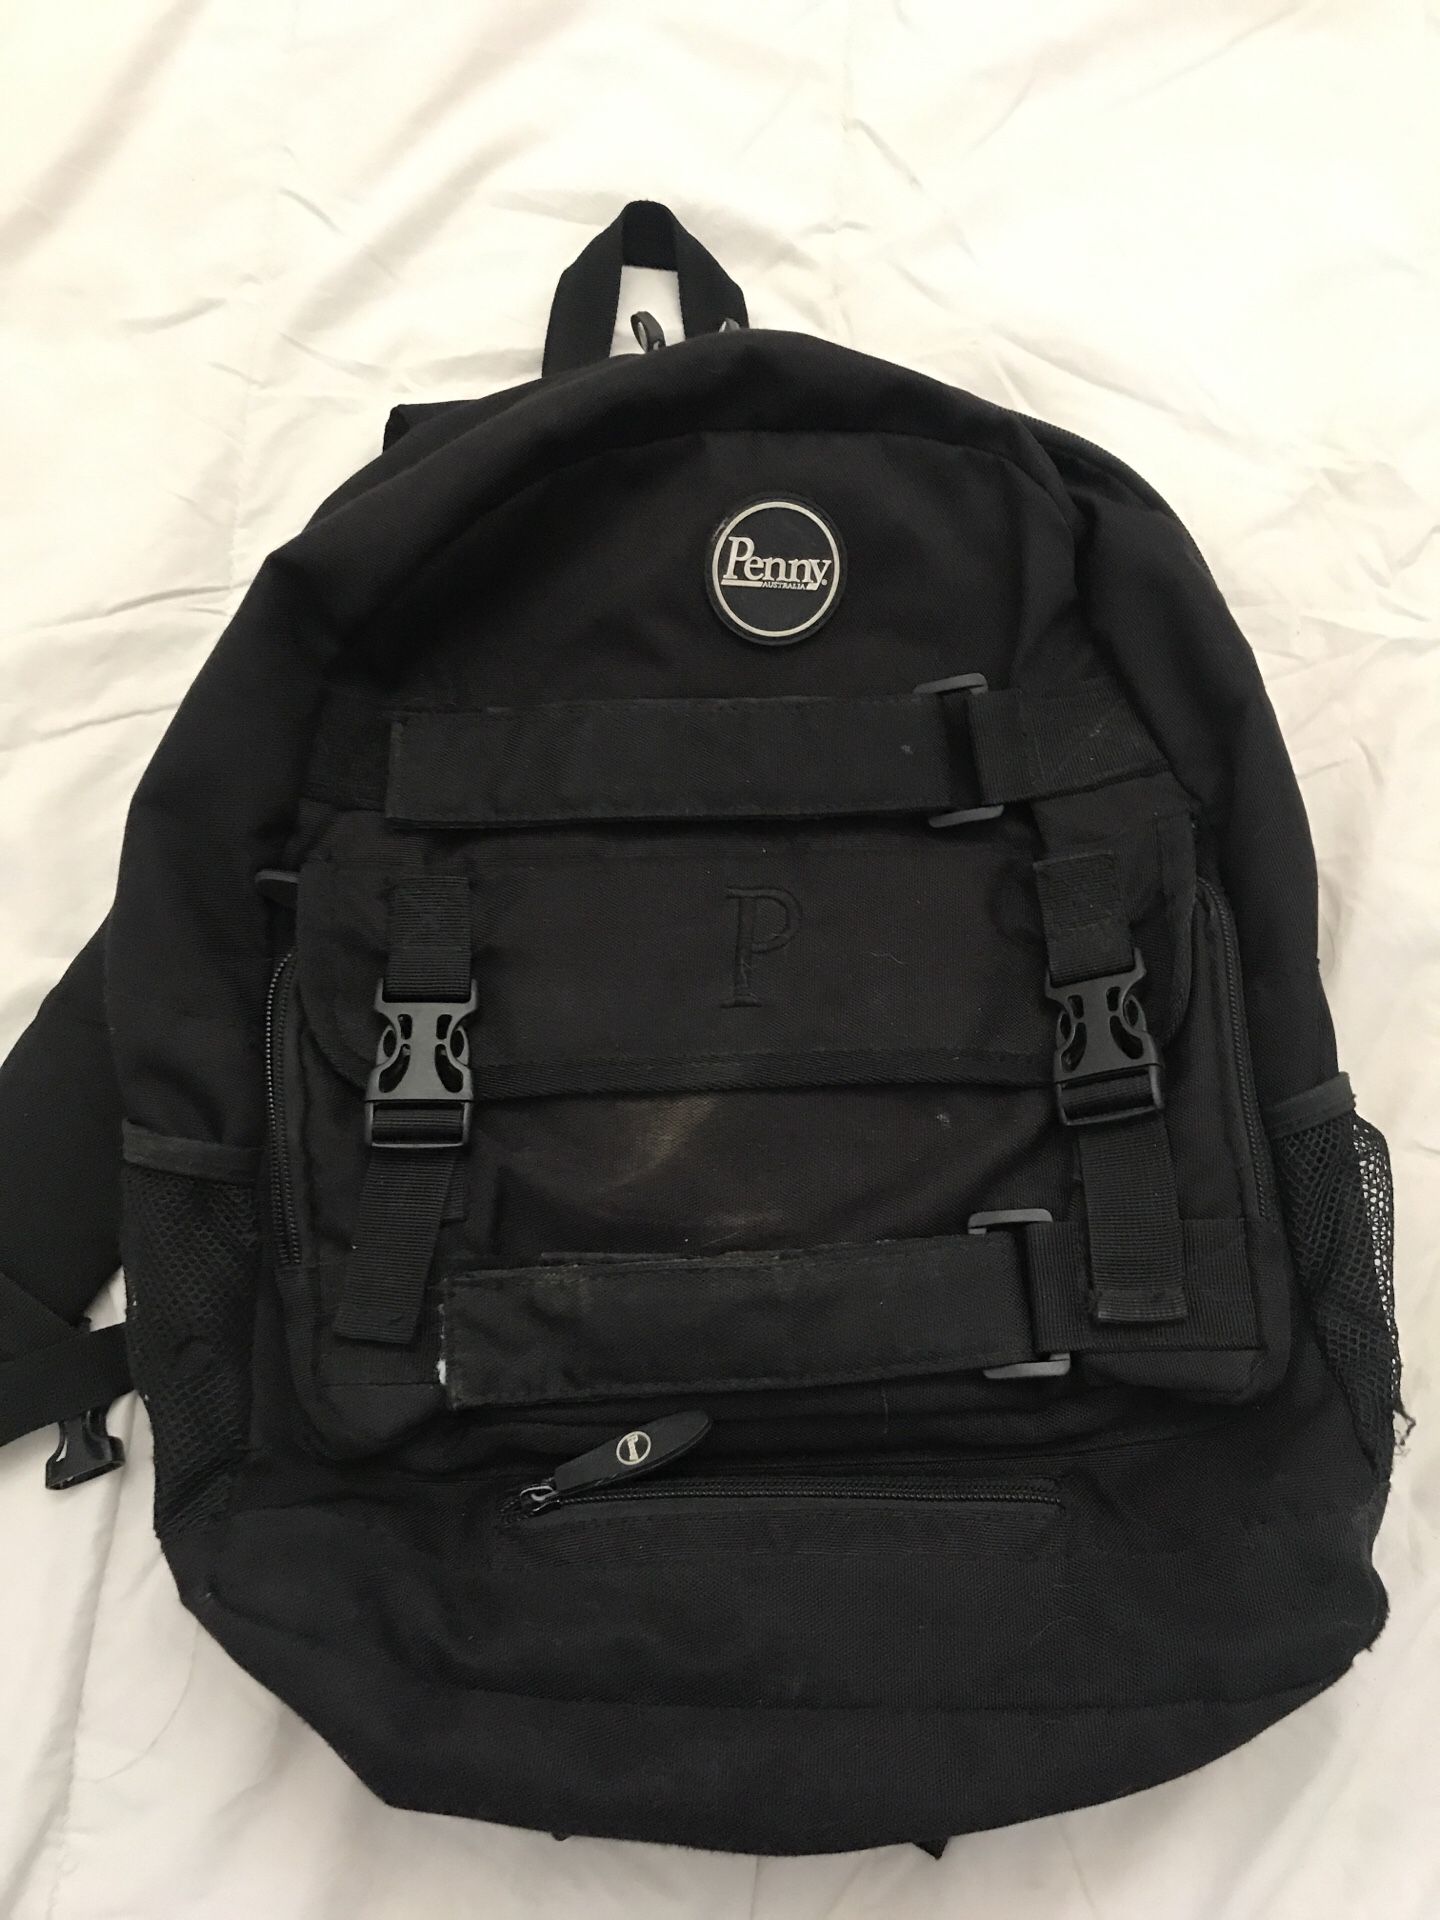 Penny board backpack made in Australia